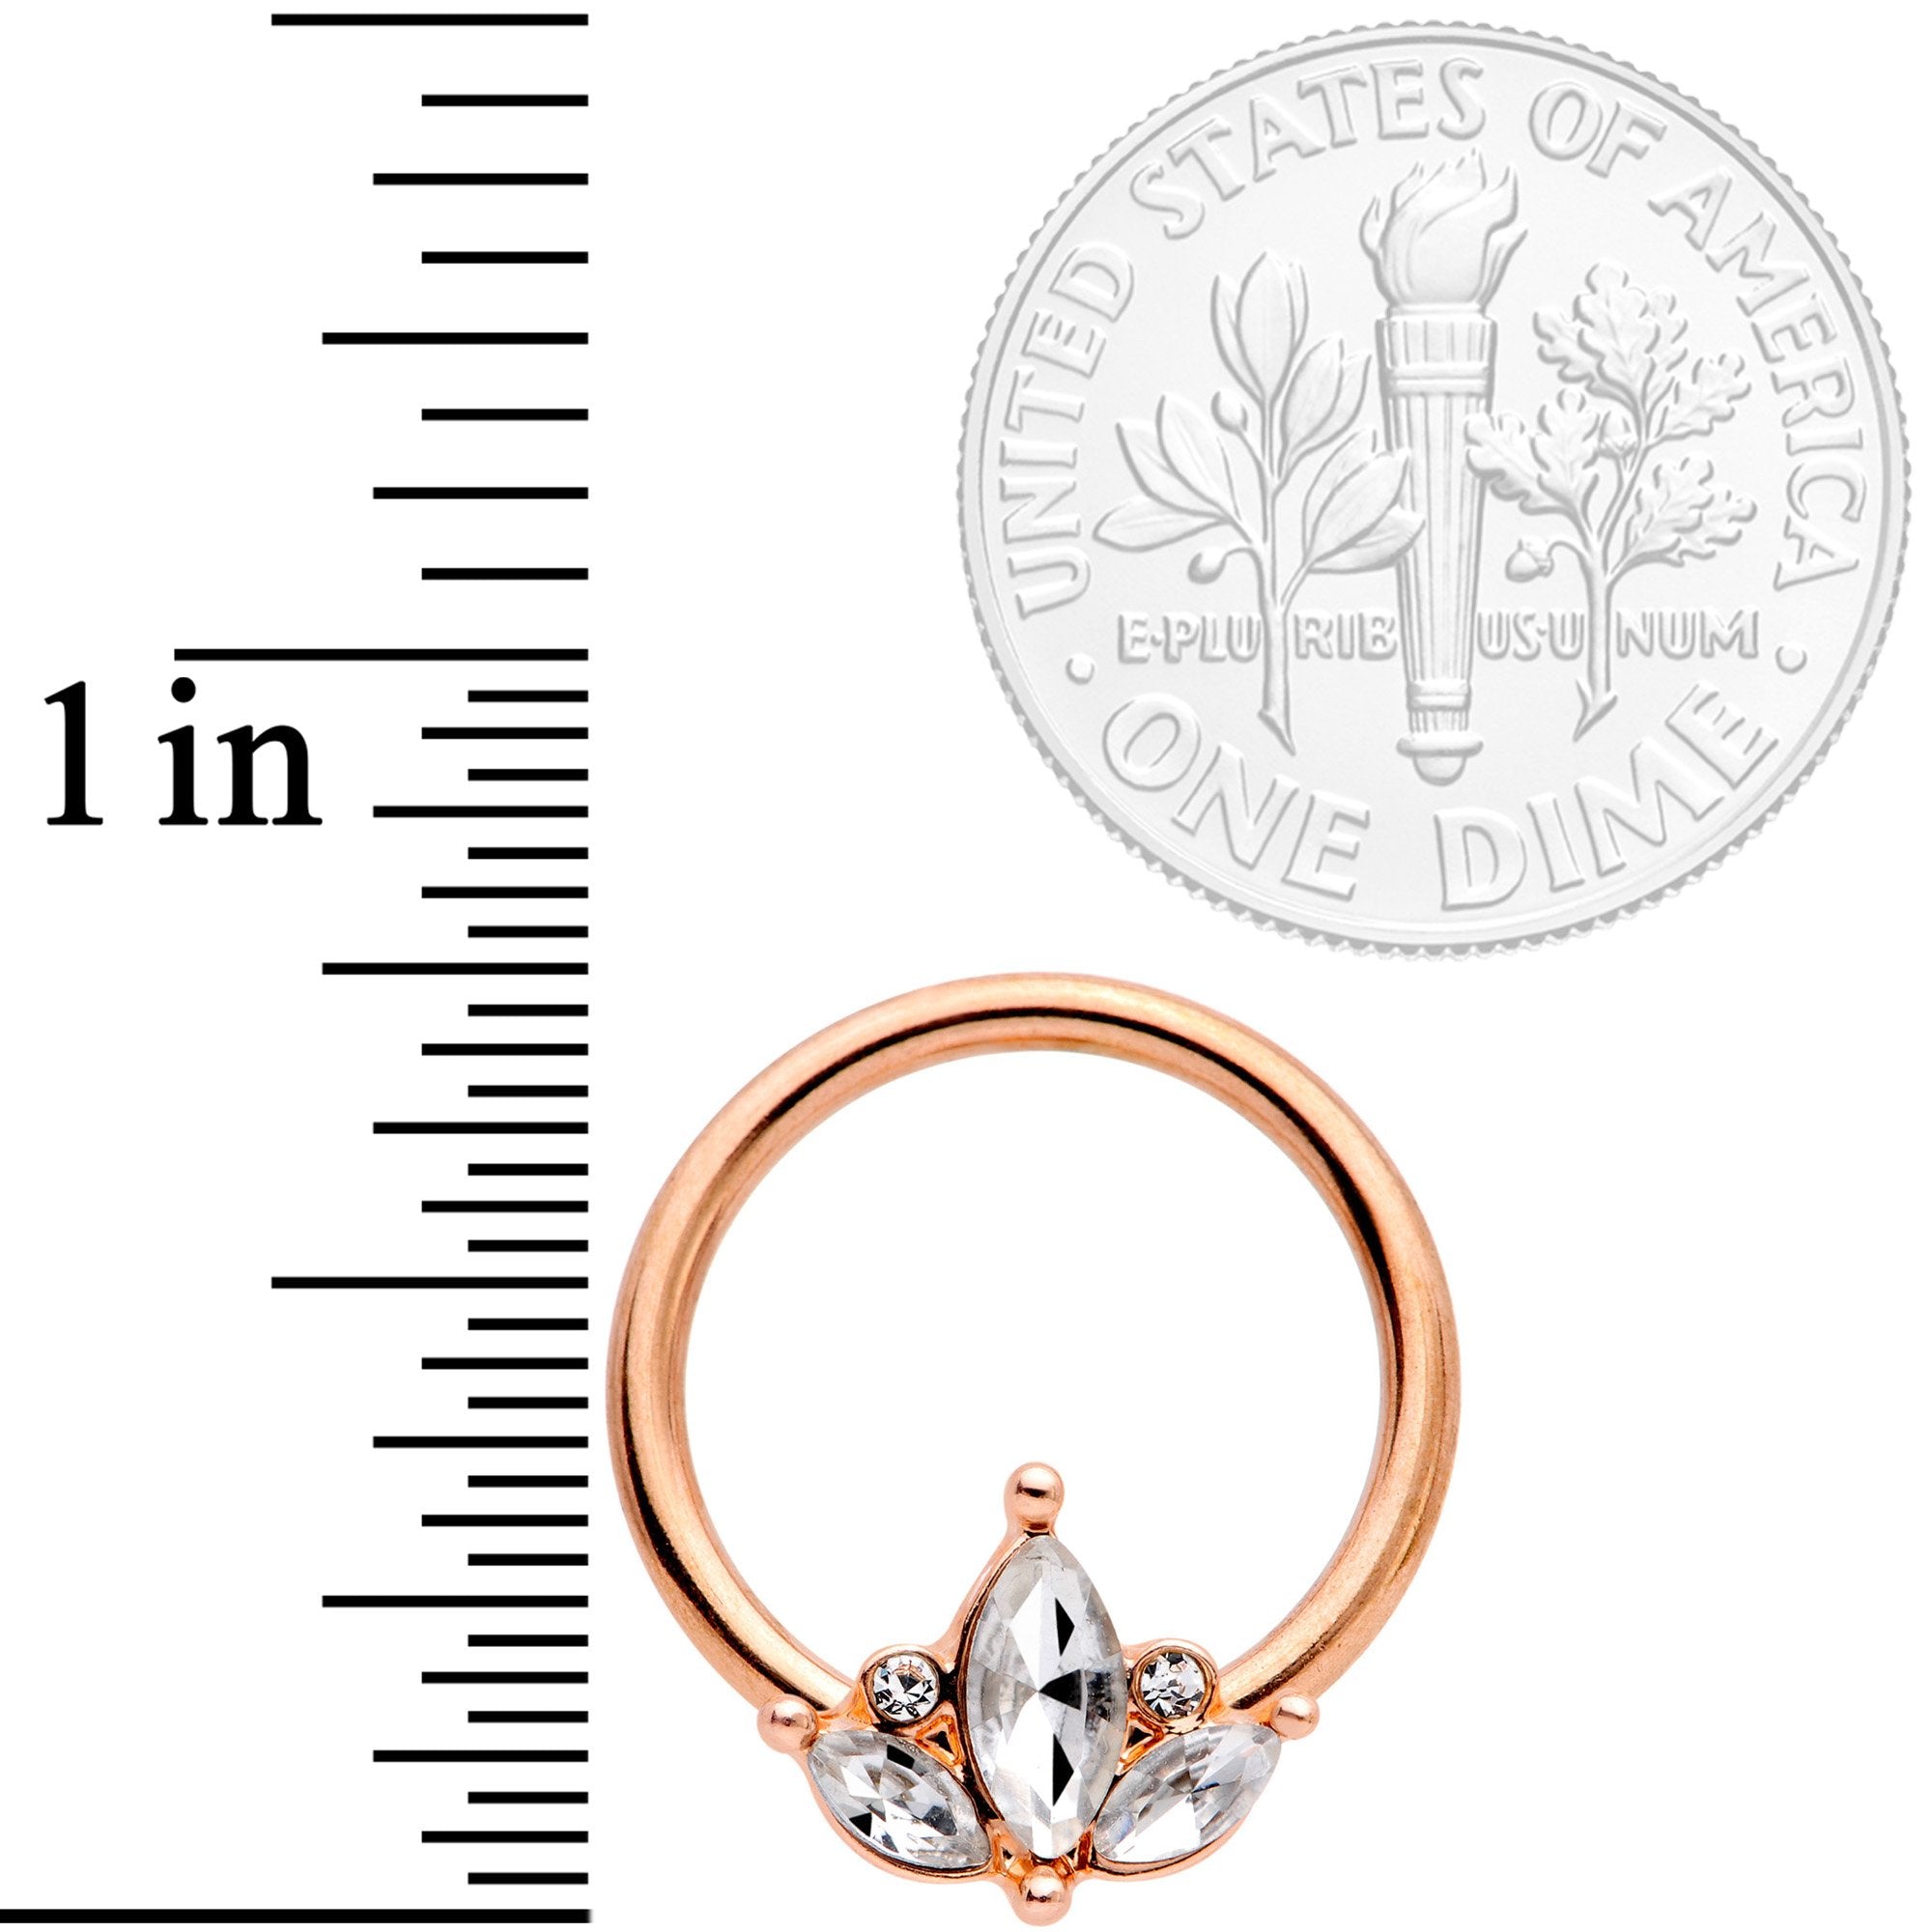 14 Gauge 0.51 inch Clear CZ Rose Gold Tone Crest BCR Captive Ring Set of 3